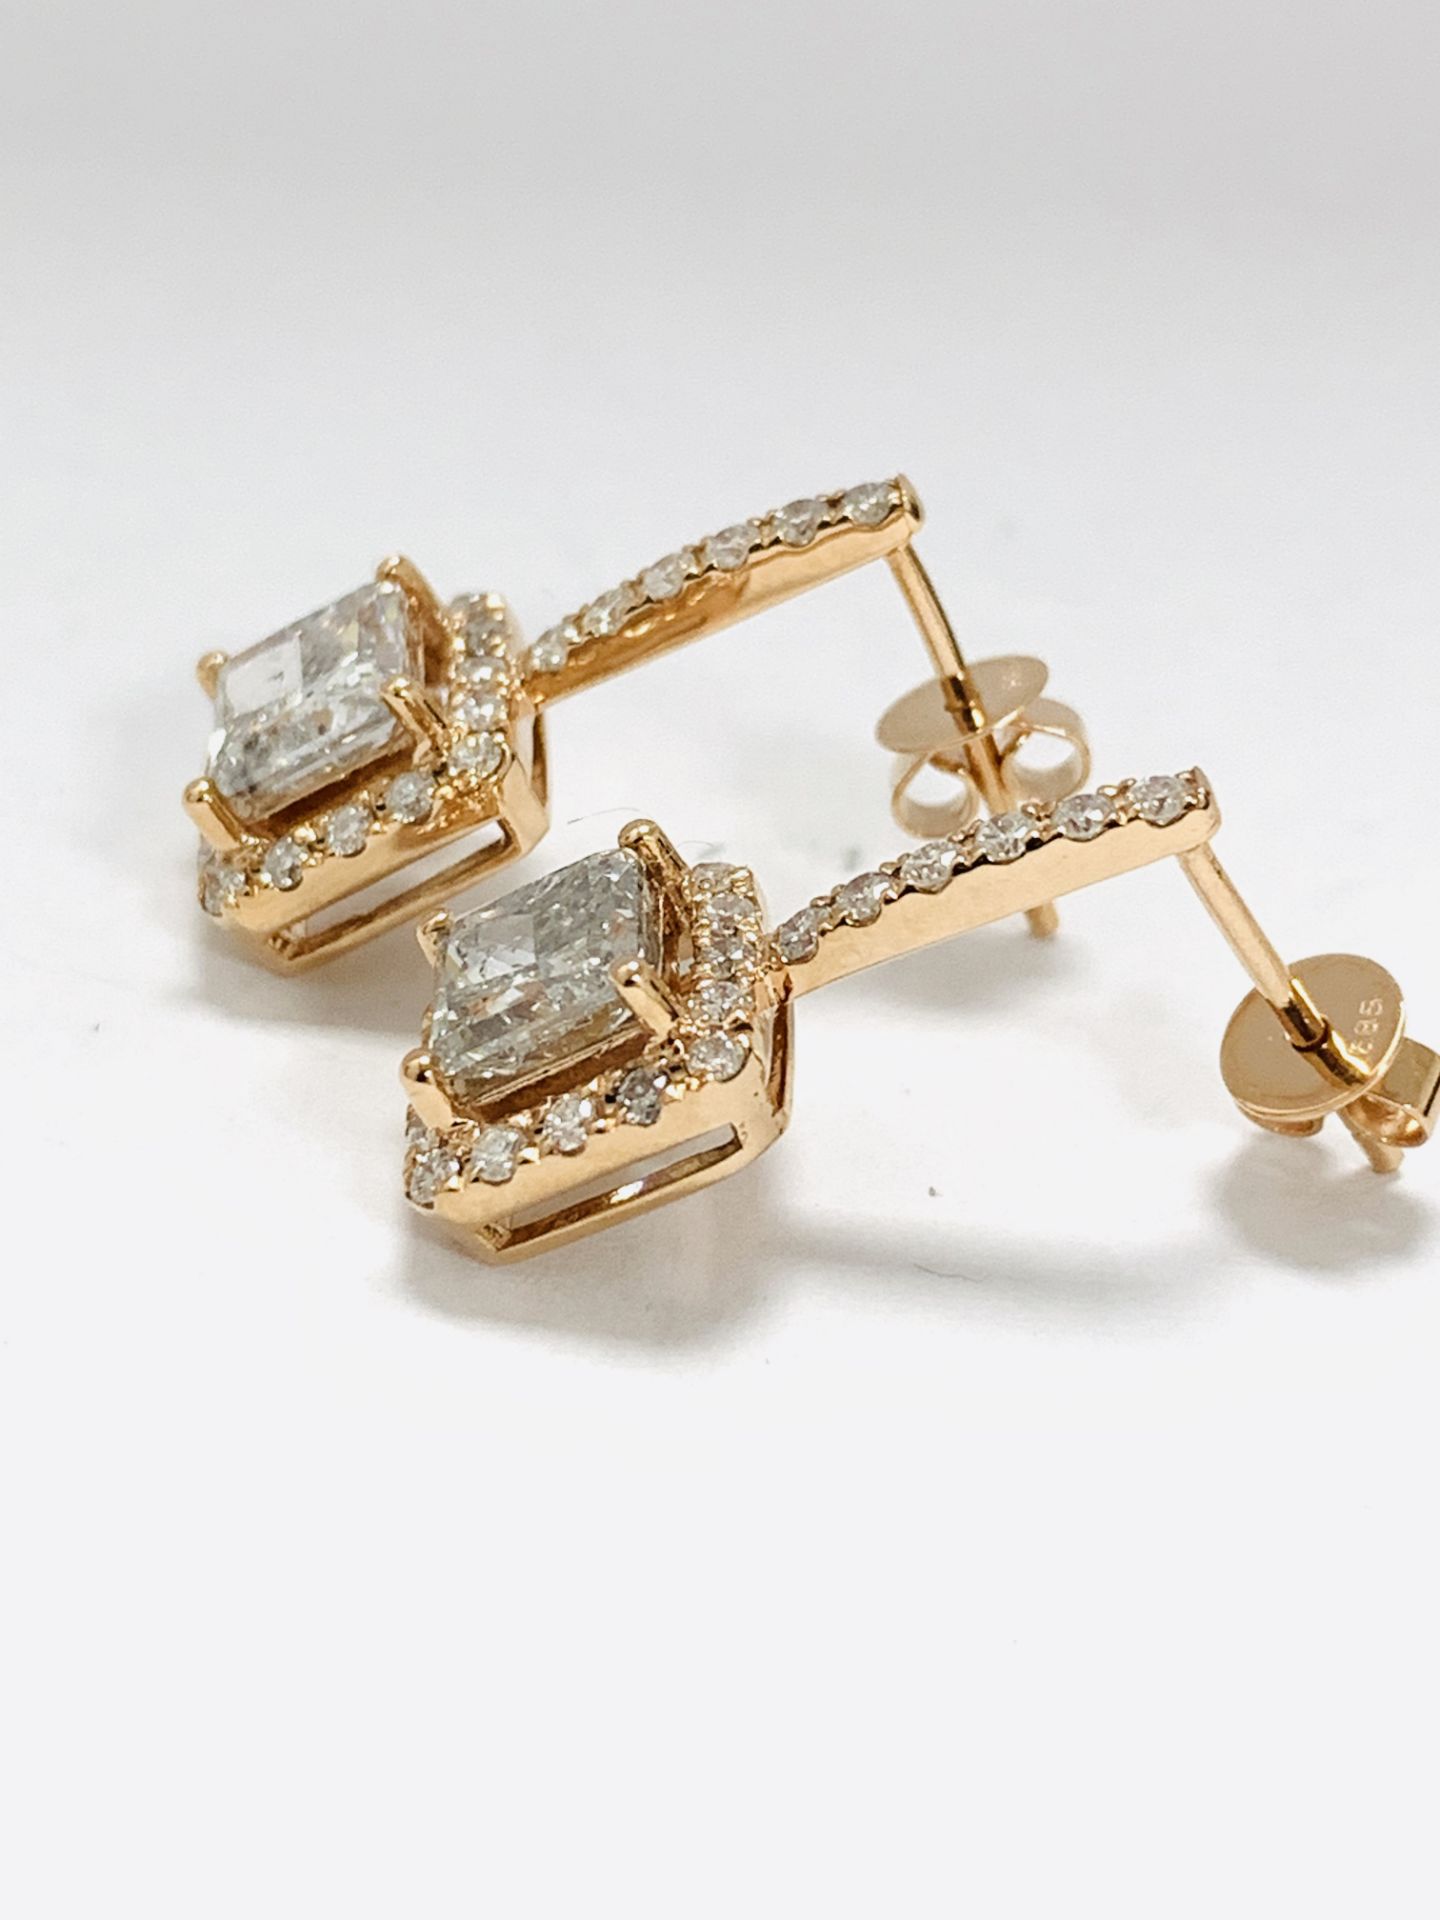 14K Rose Gold Pair Of Earrings - Image 2 of 8